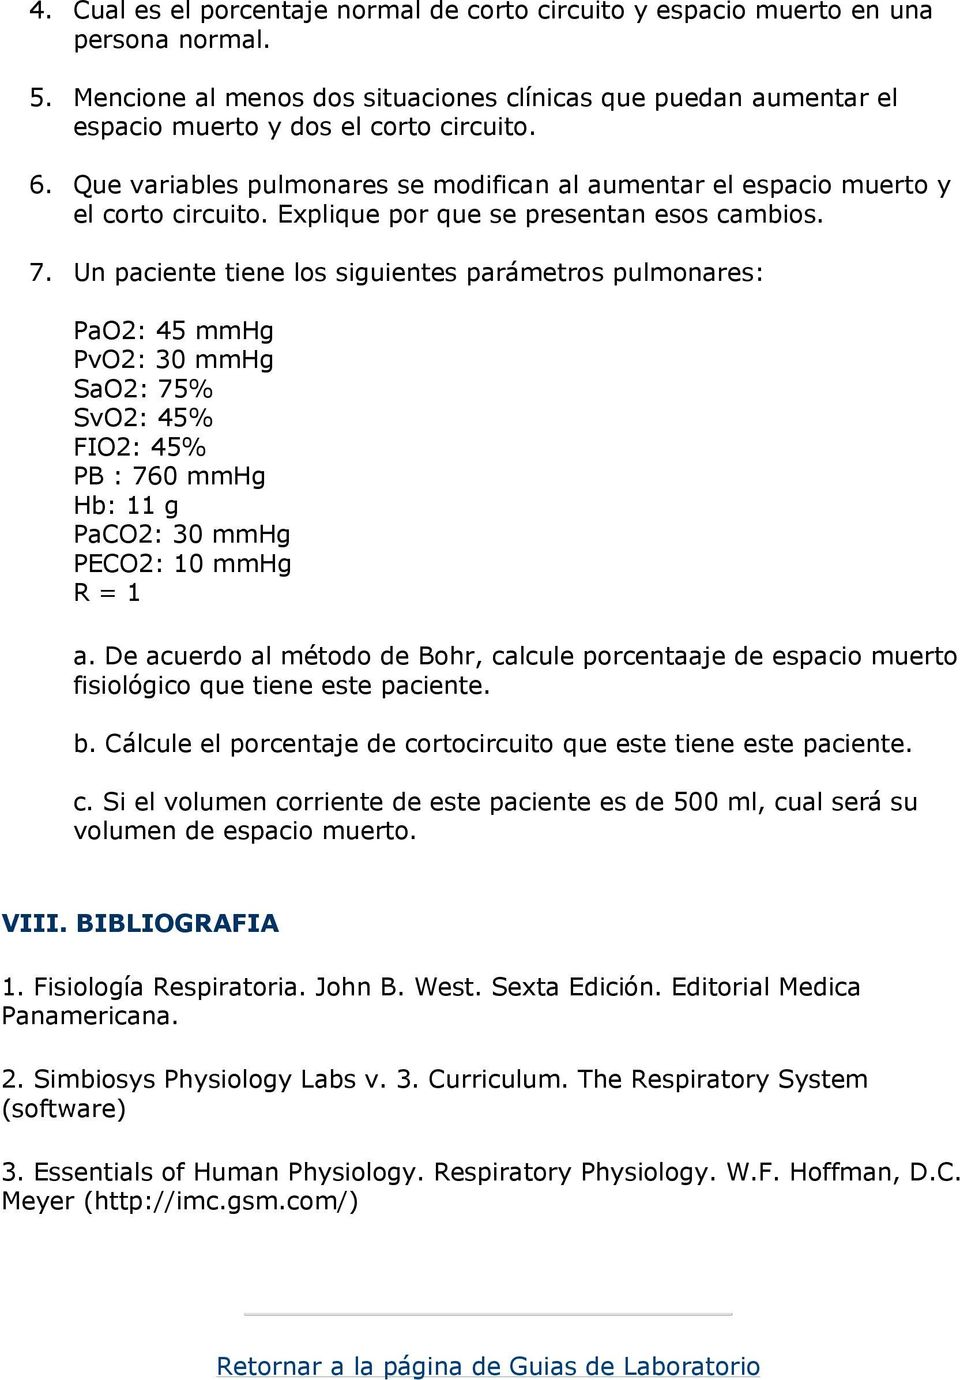 Un paciente tiene los siguientes parámetros pulmonares: PaO2: 45 mmhg PvO2: 30 mmhg SaO2: 75% SvO2: 45% FIO2: 45% PB : 760 mmhg Hb: 11 g PaCO2: 30 mmhg PECO2: 10 mmhg R = 1 a.